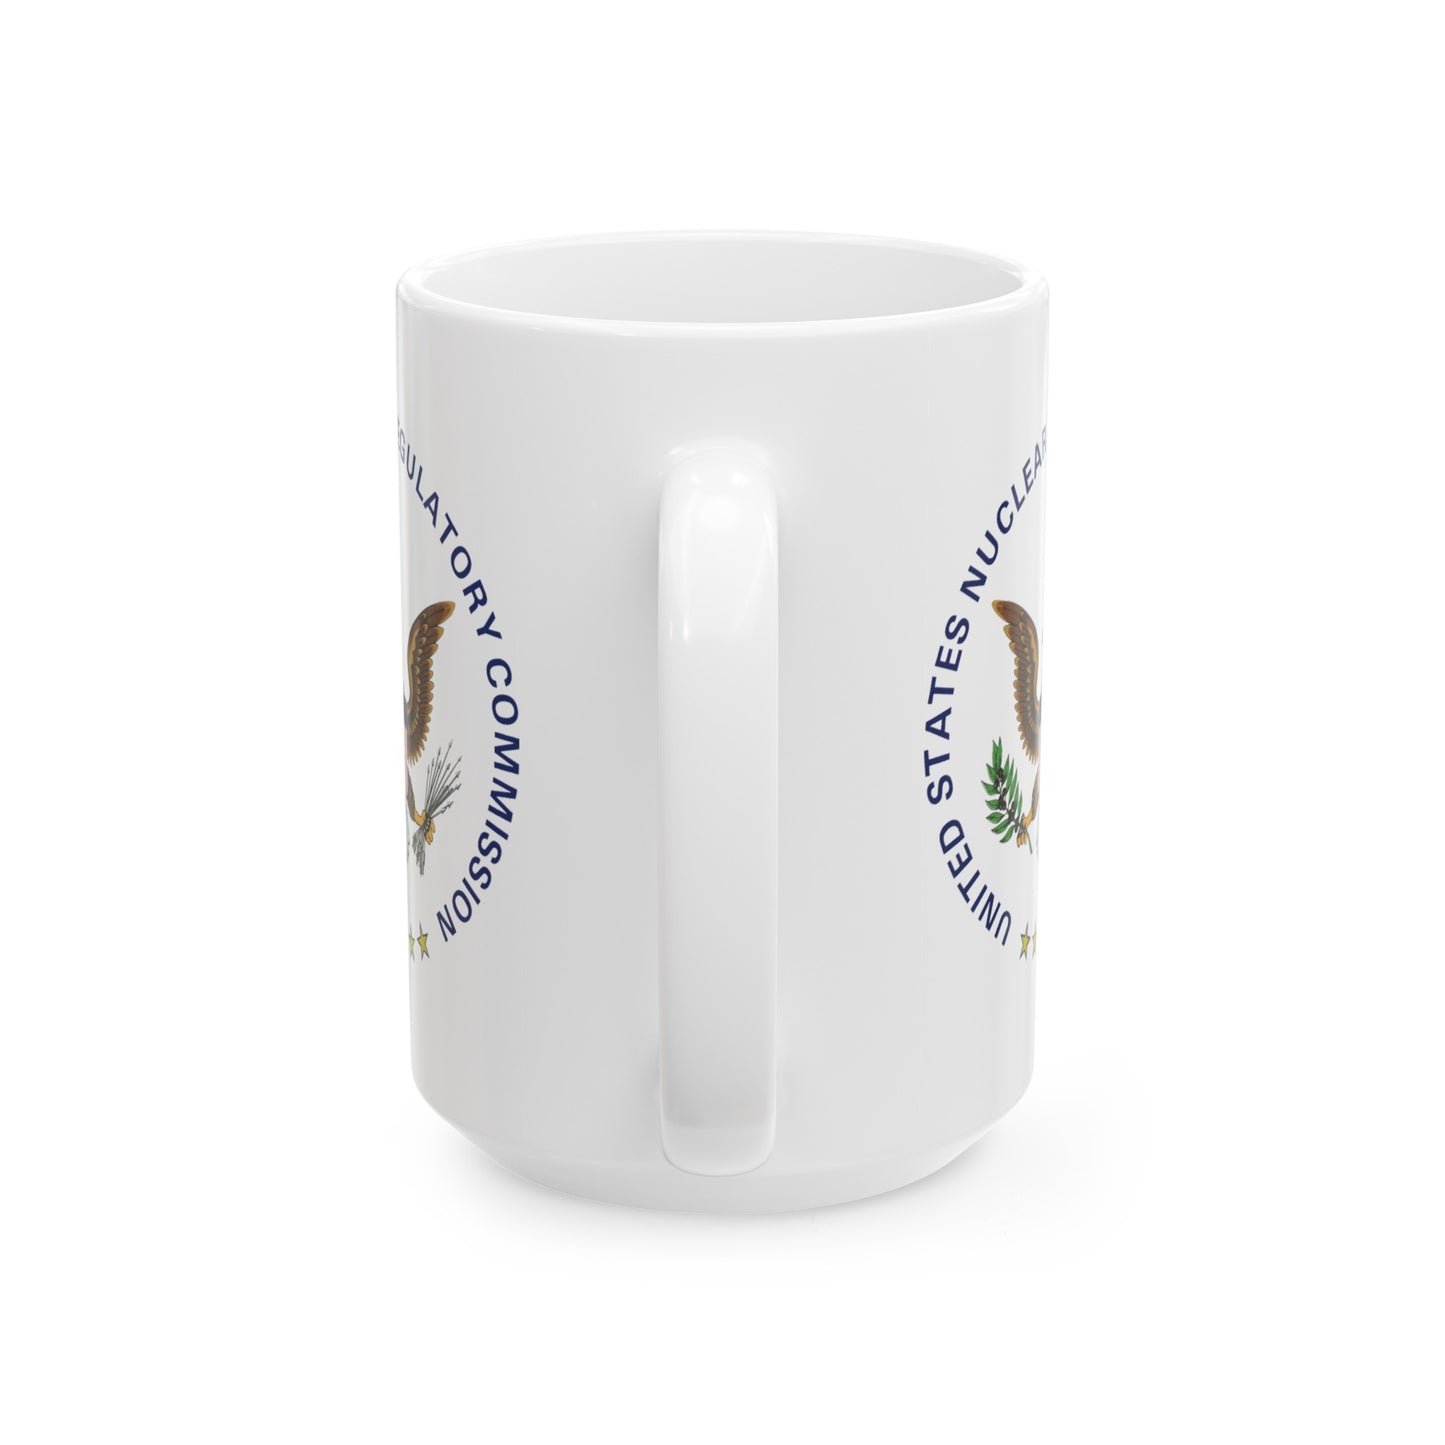 US NRC Coffee Mug - Double Sided White Ceramic 15oz by TheGlassyLass.com